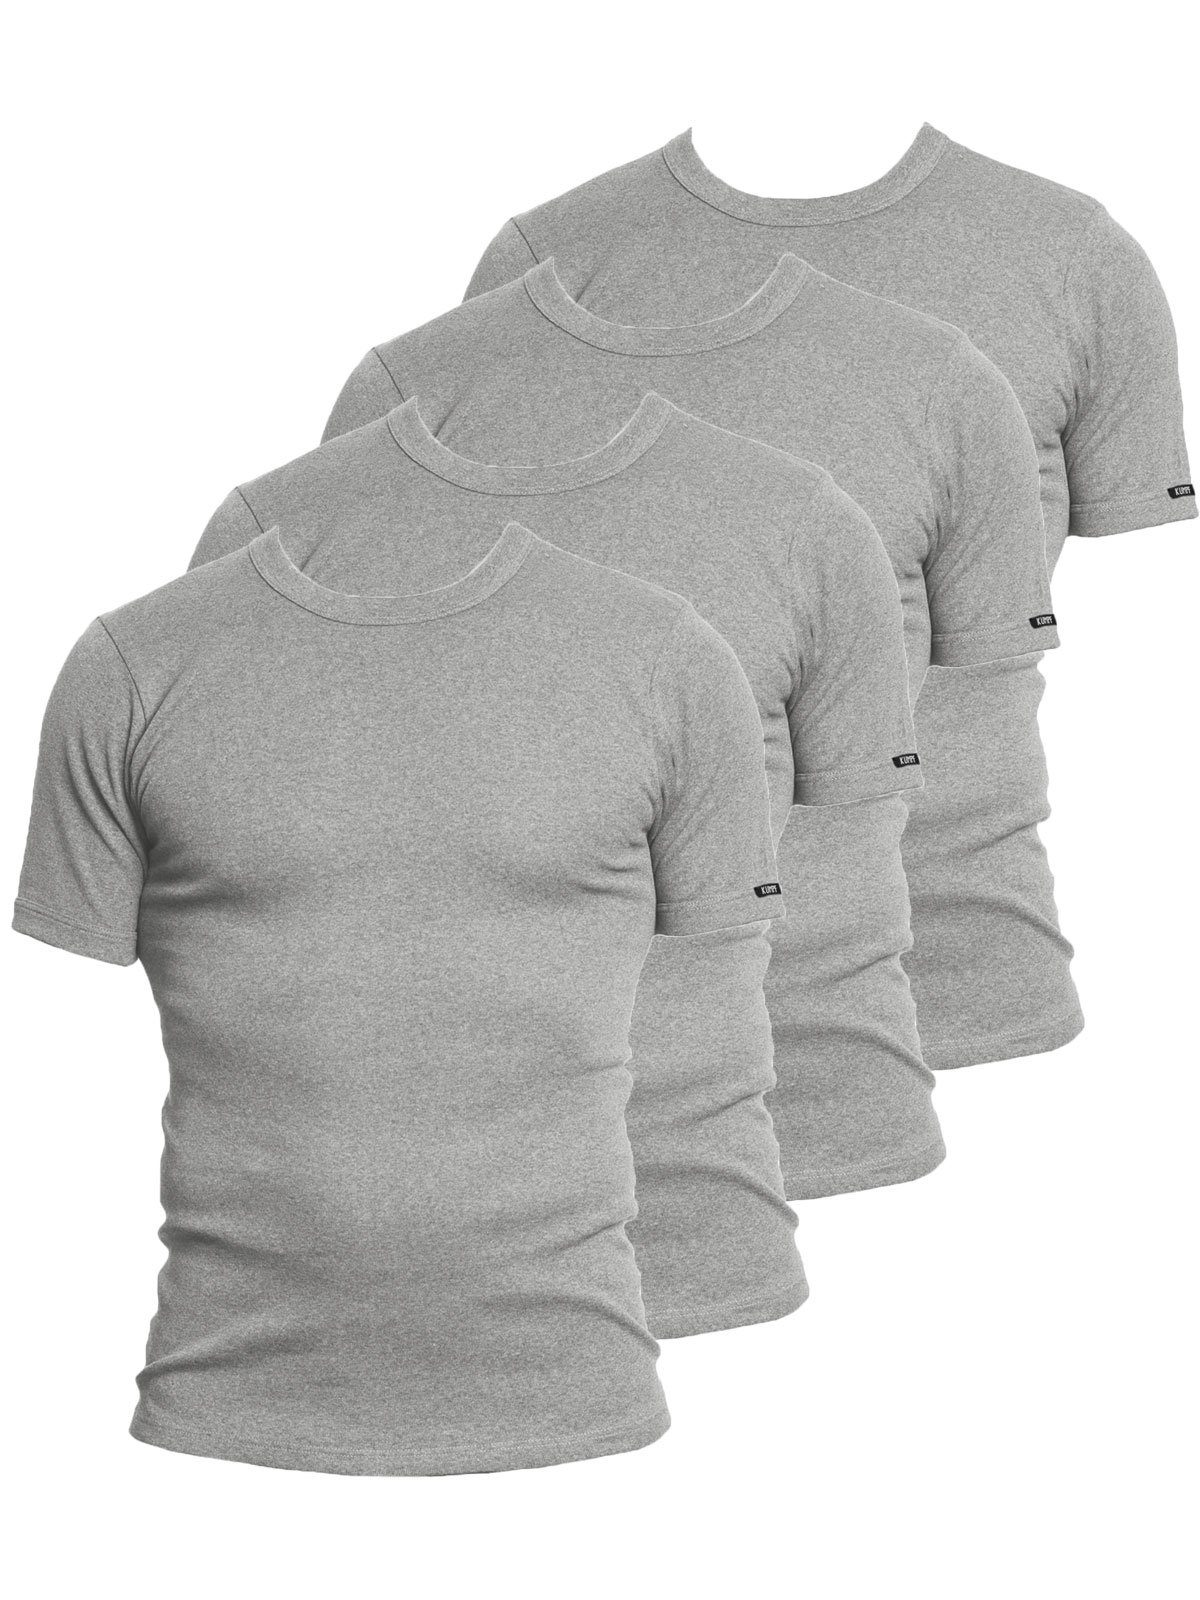 4er Sparpack 4-St) KUMPF Markenqualität T-Shirt Unterziehshirt stahlgrau-melange hohe (Spar-Set, Herren Bio Cotton